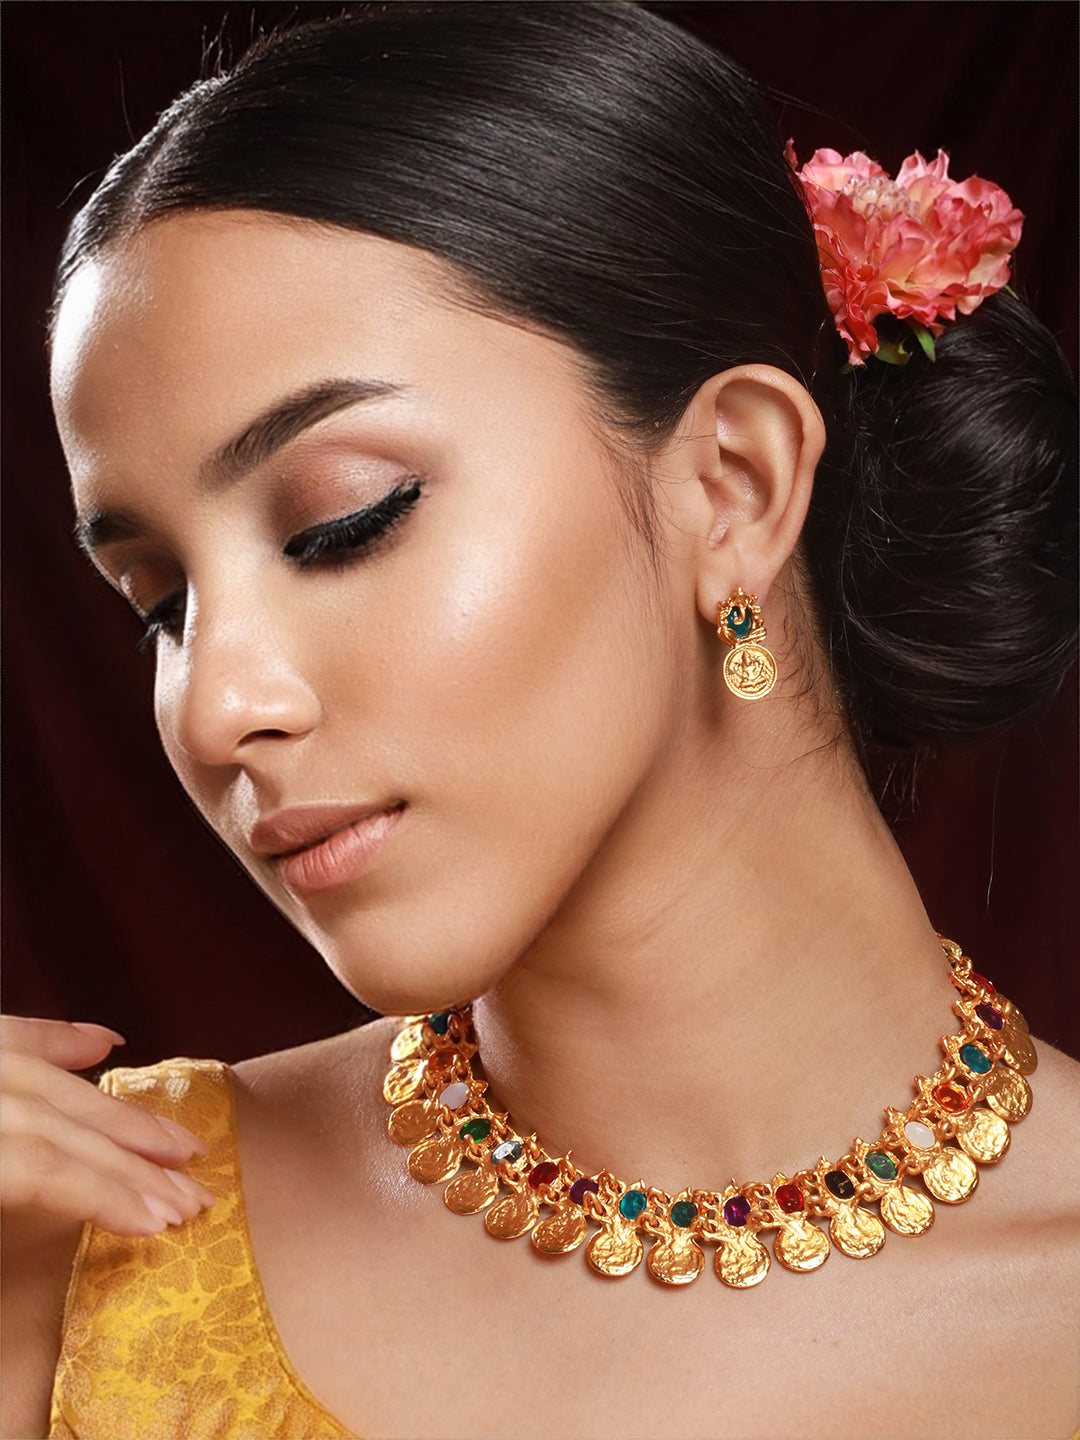 Priyaasi Multicolor Stone Ganesha Laxmi Coin Gold-Plated Jewellery Set